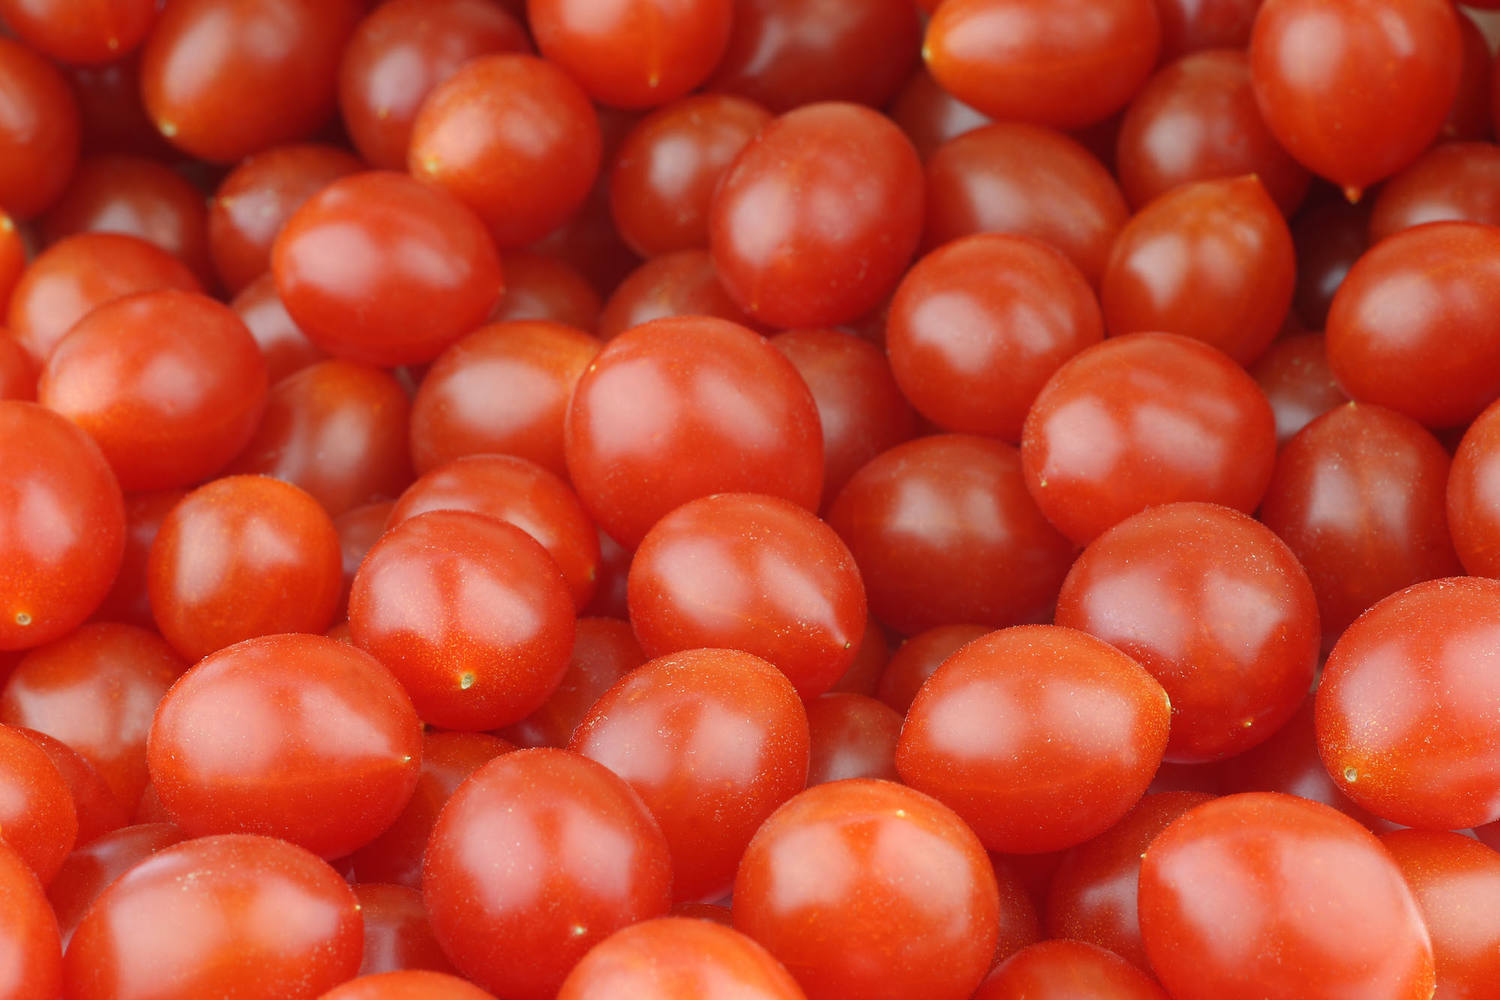 Tomberry tomaatjes rood 125gr stuk 2